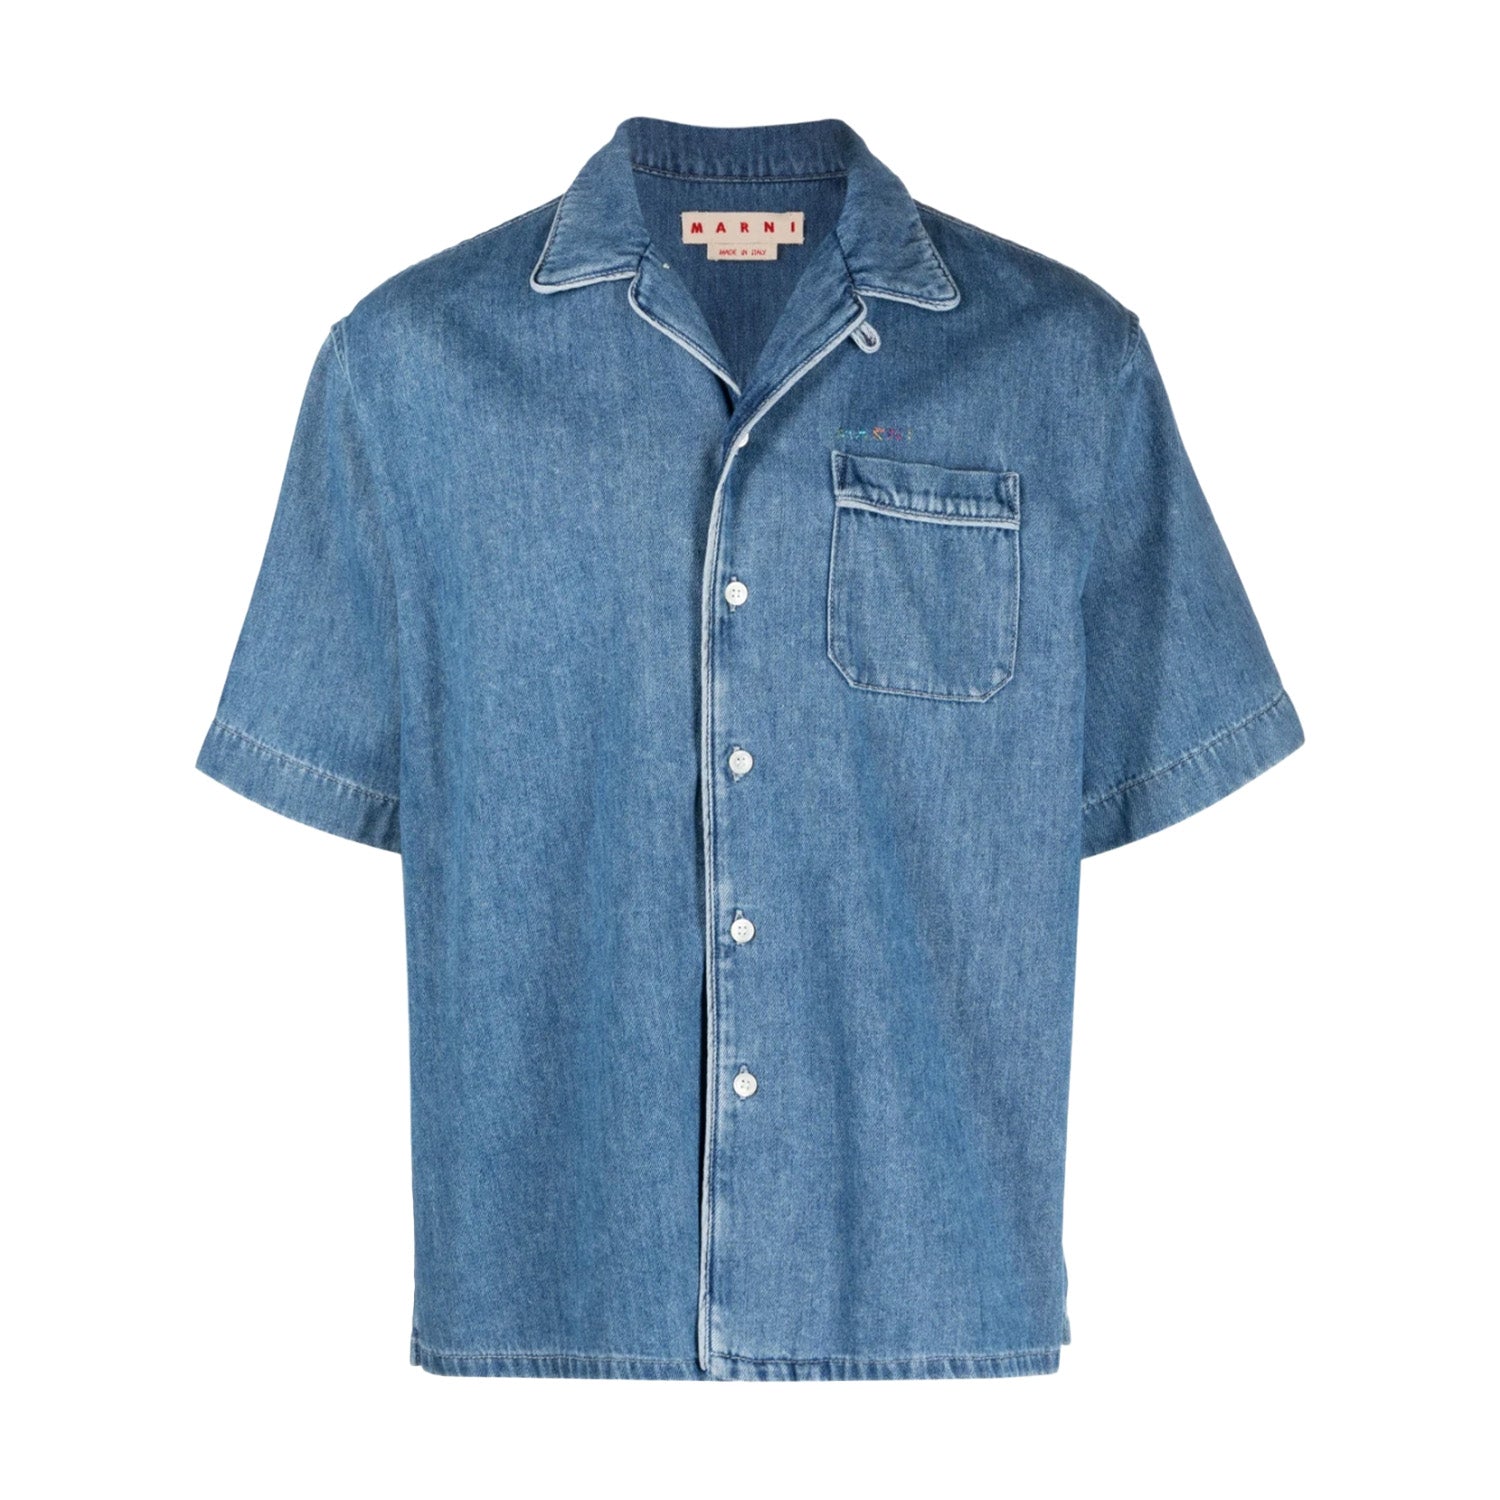 Buttoned Denim Shirt (Stone Washed Blue)